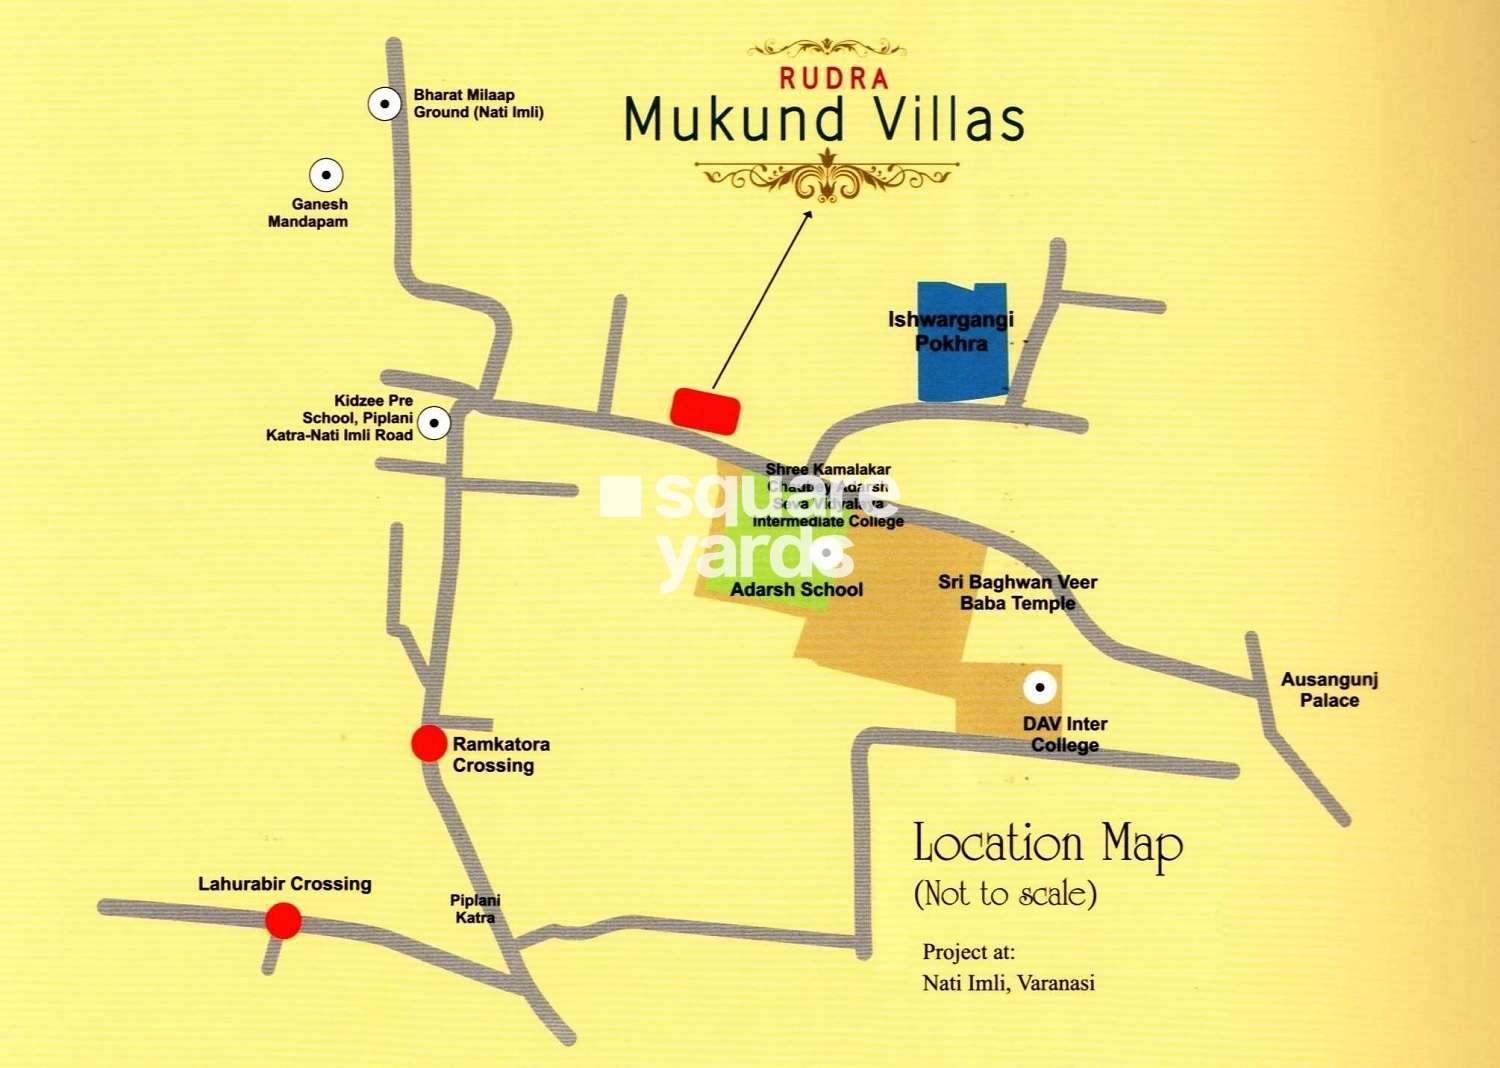 rudra mukund villas project location image1